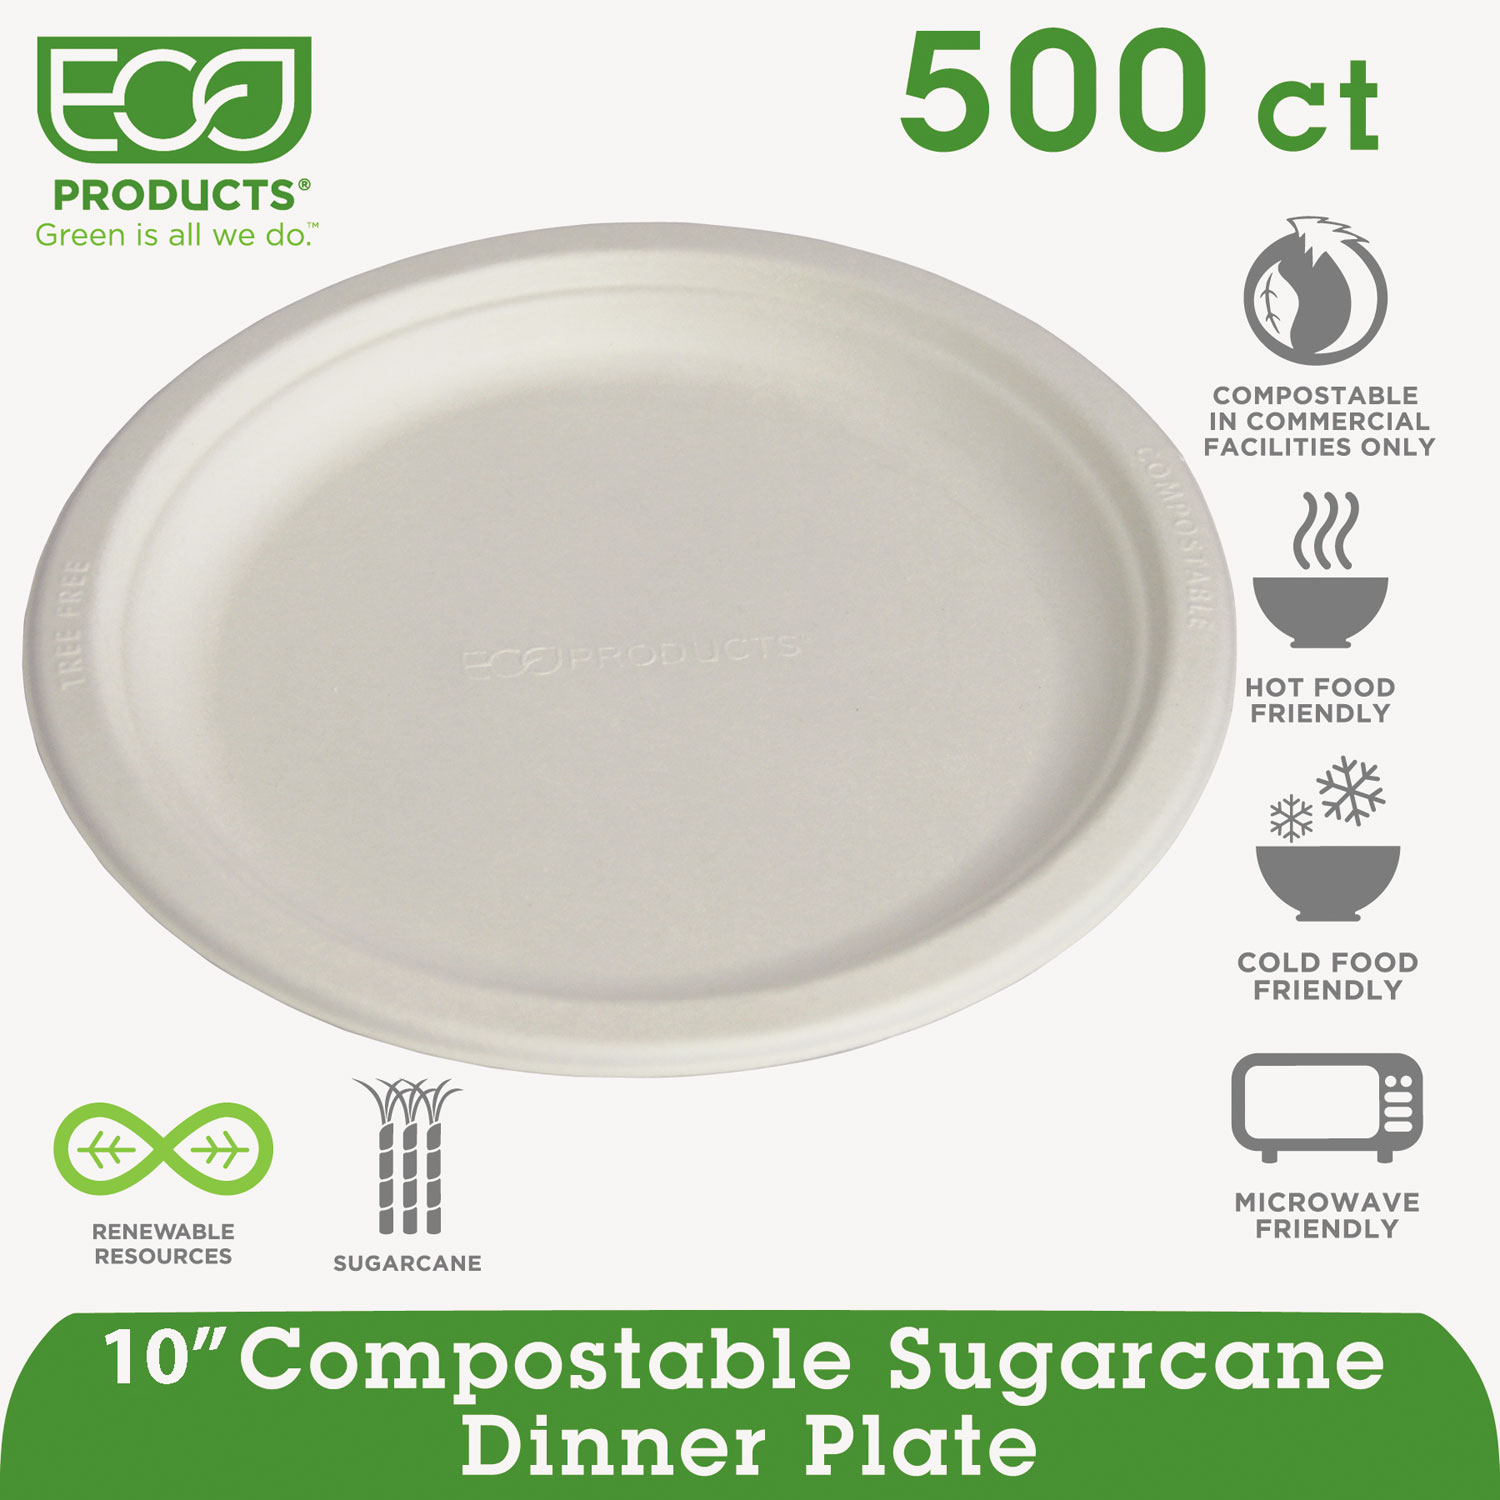  Eco-Products EP-P005 Renewable & Compostable Sugarcane Plates - 10, 500/CT (ECOEPP005) 